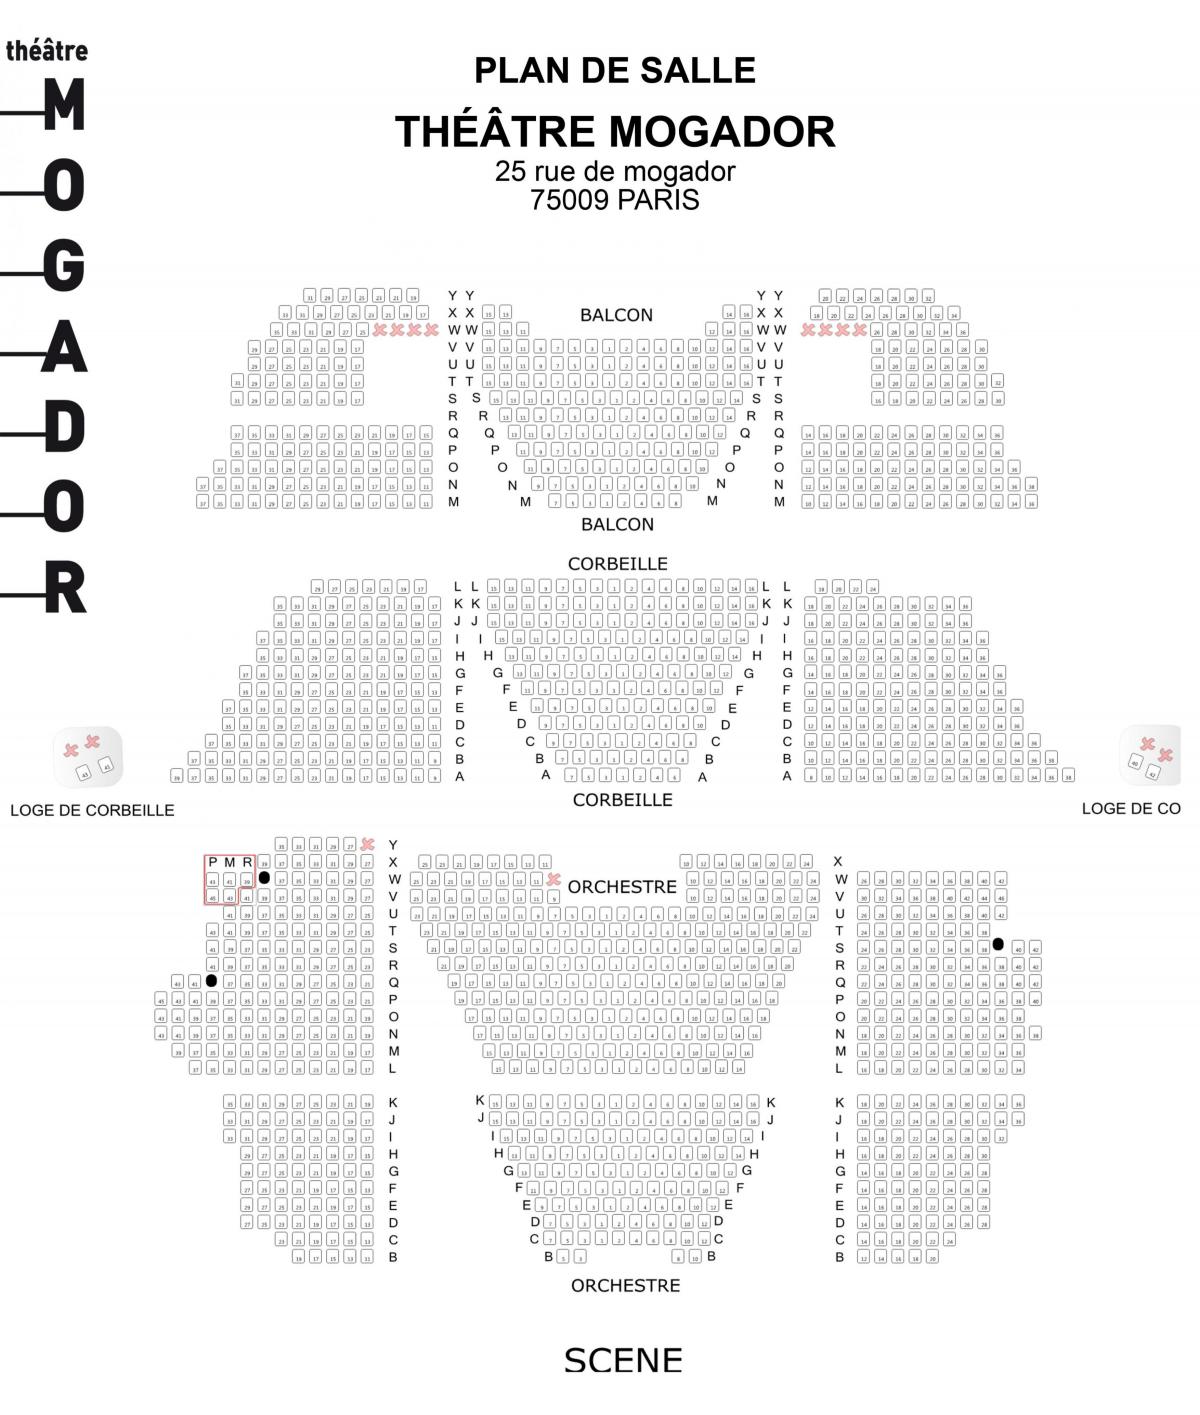 Bản đồ của Théâtre Mogador